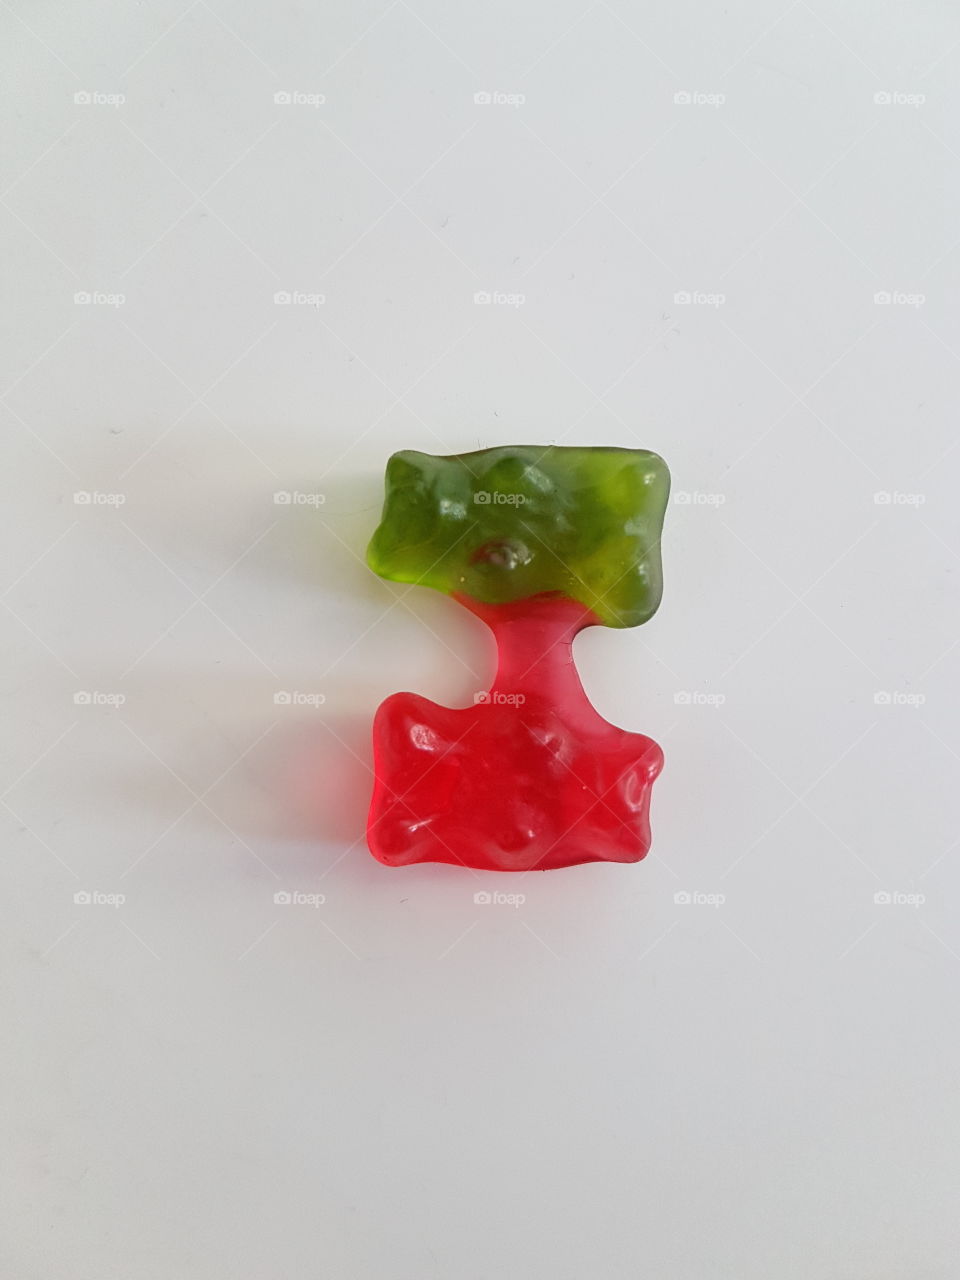 gummy bear stuck together